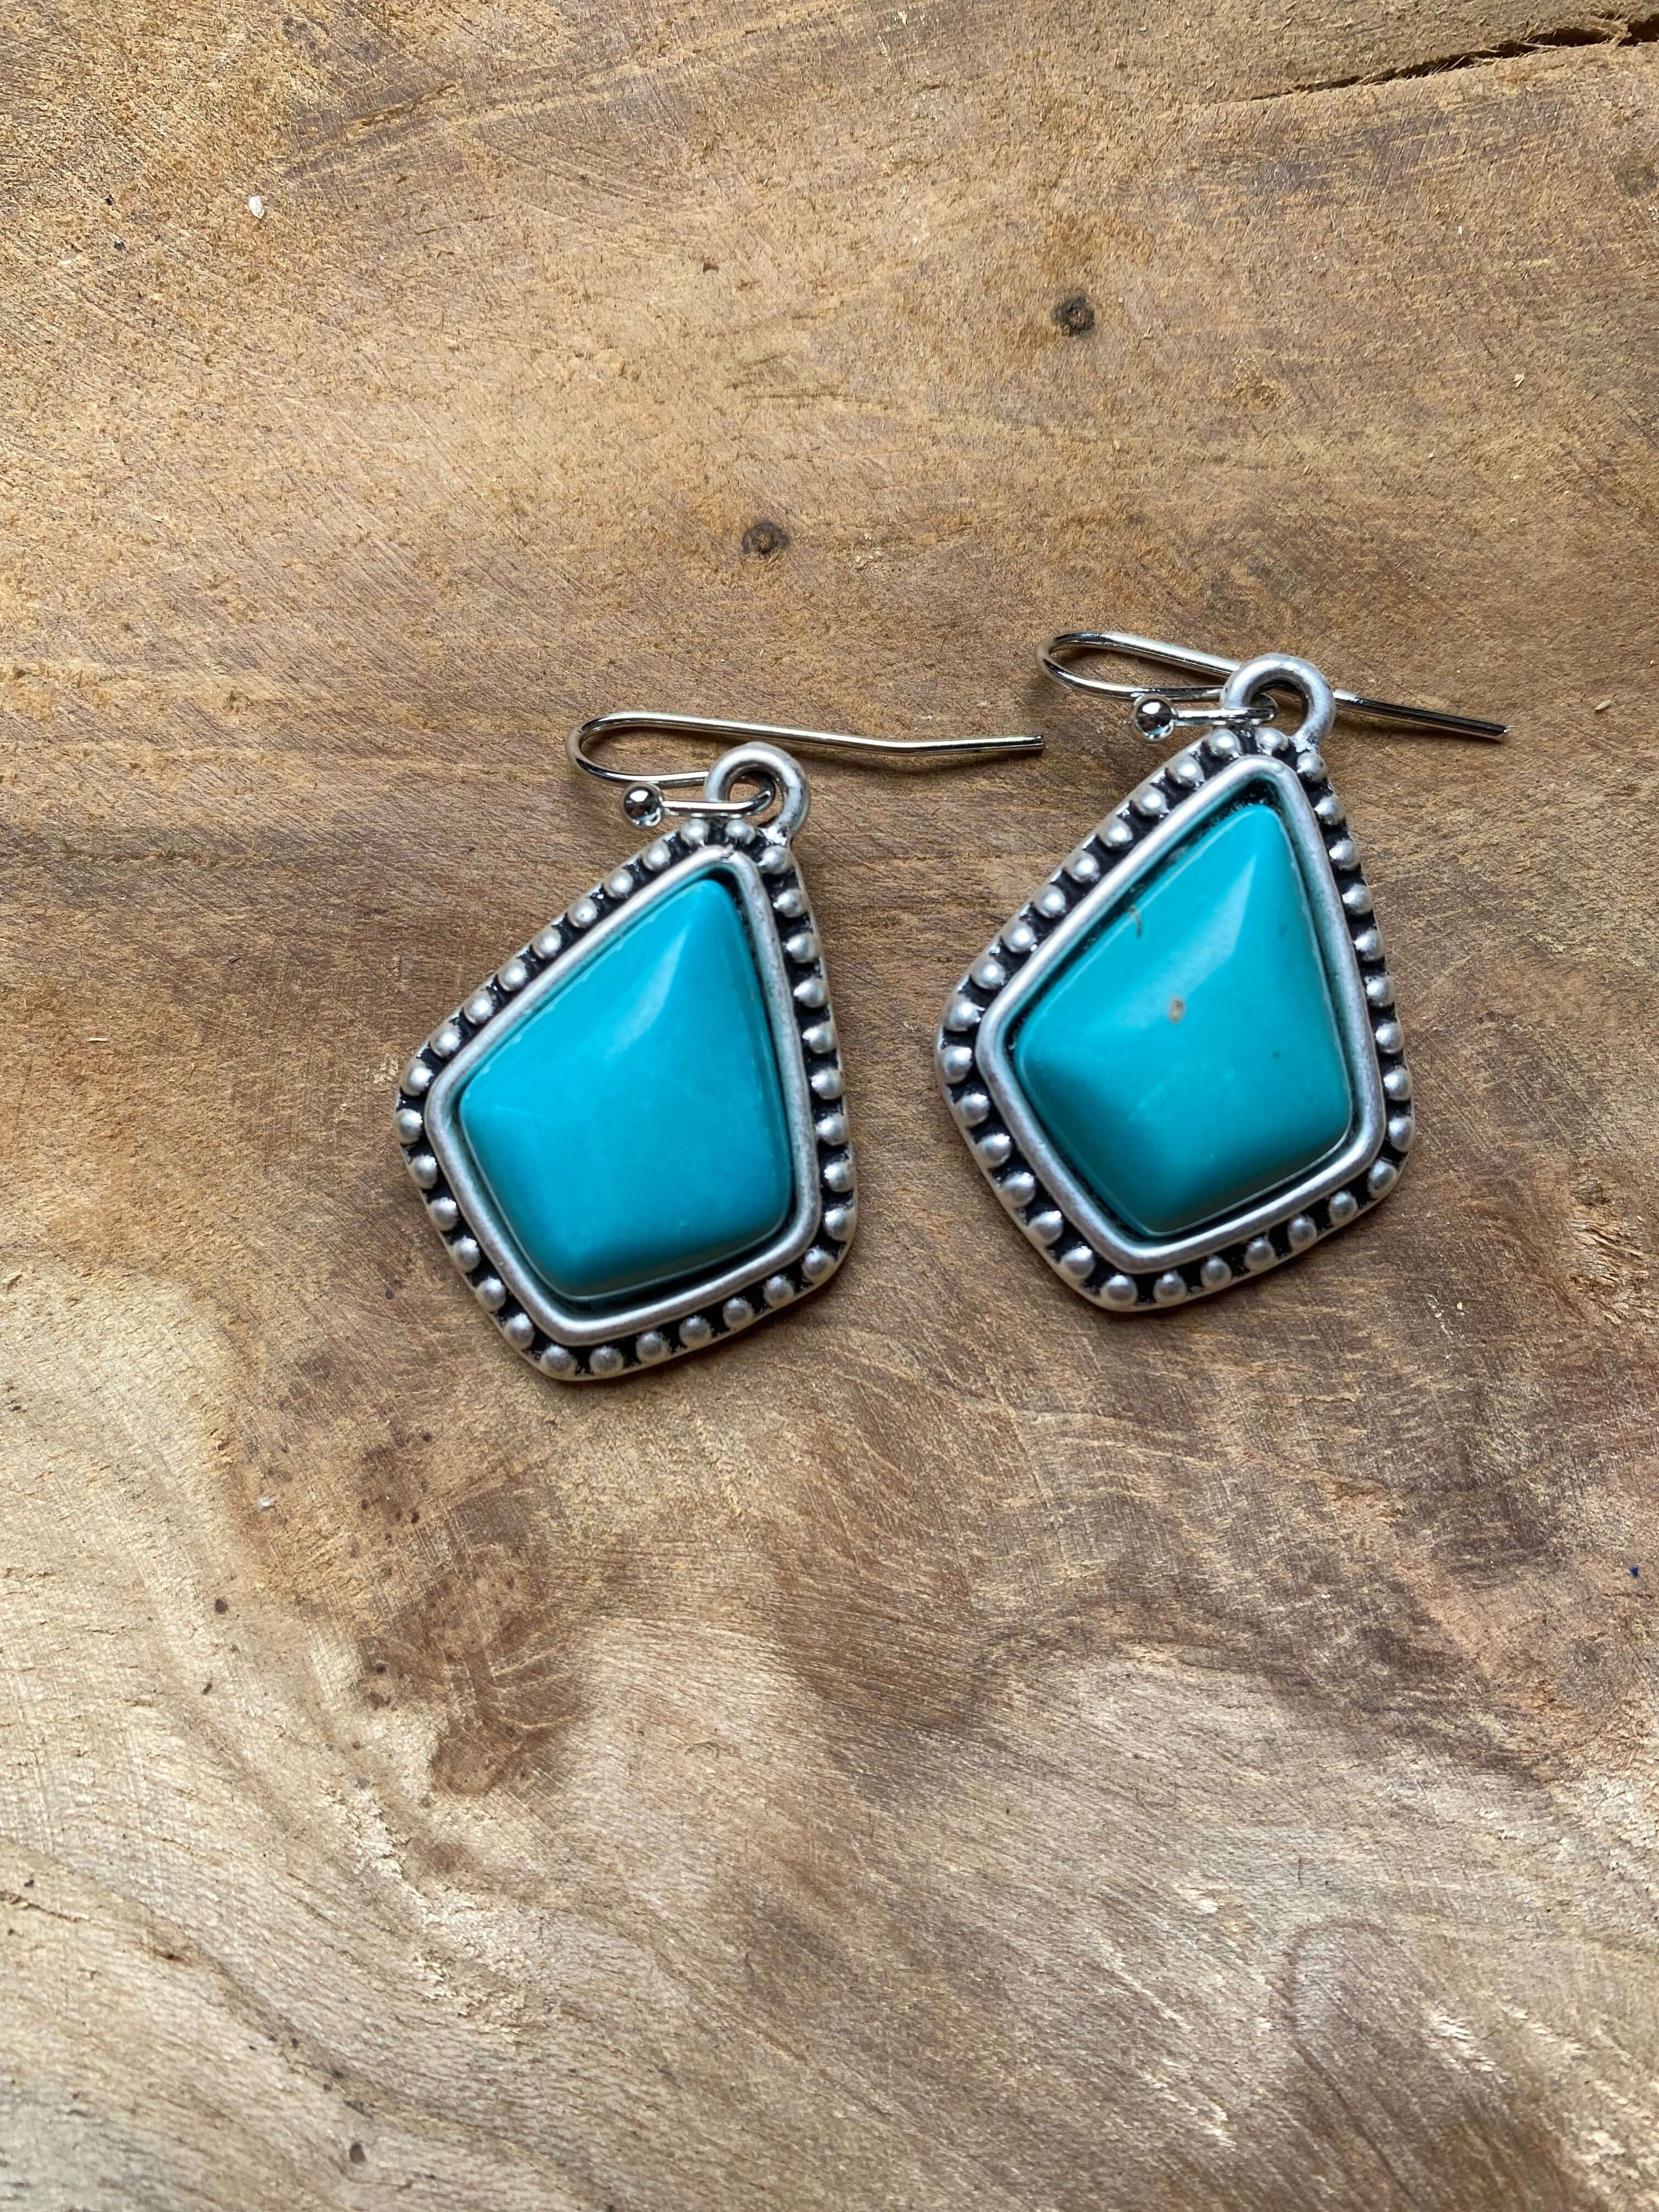 Turquoise pendant earrings